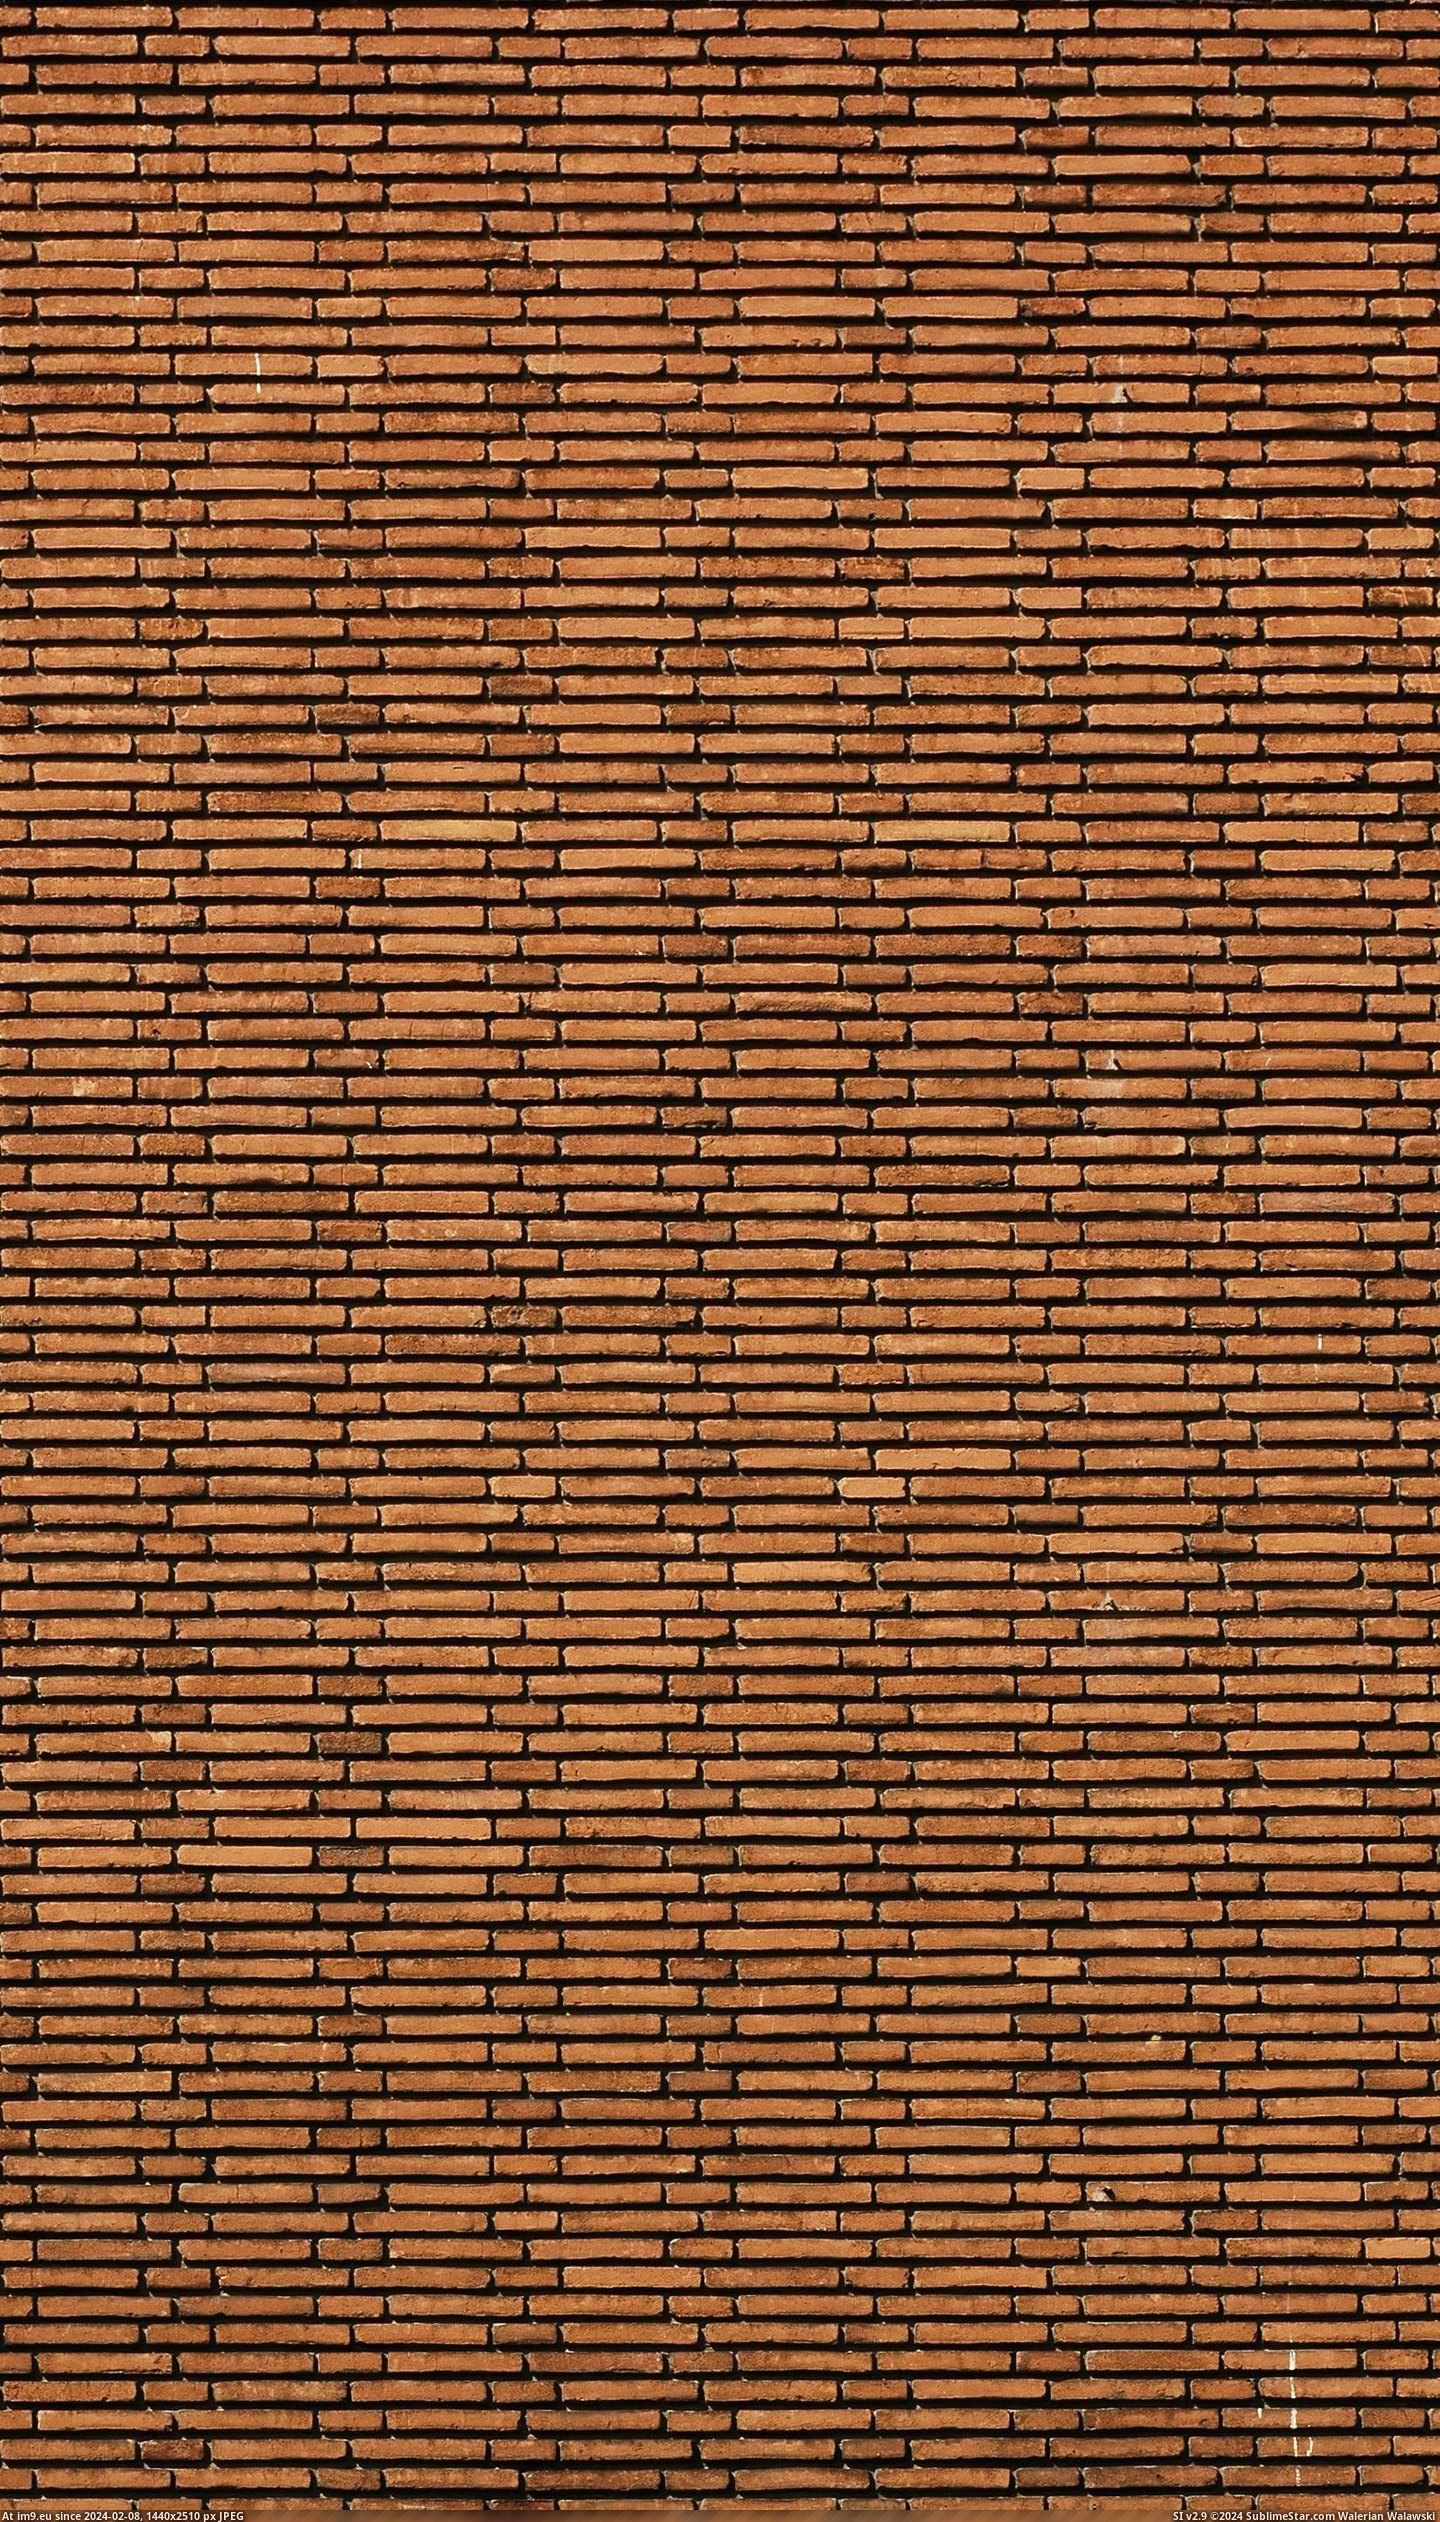 Brick Small Brown 4 (brick wall) (in Brick walls textures and wallpapers)